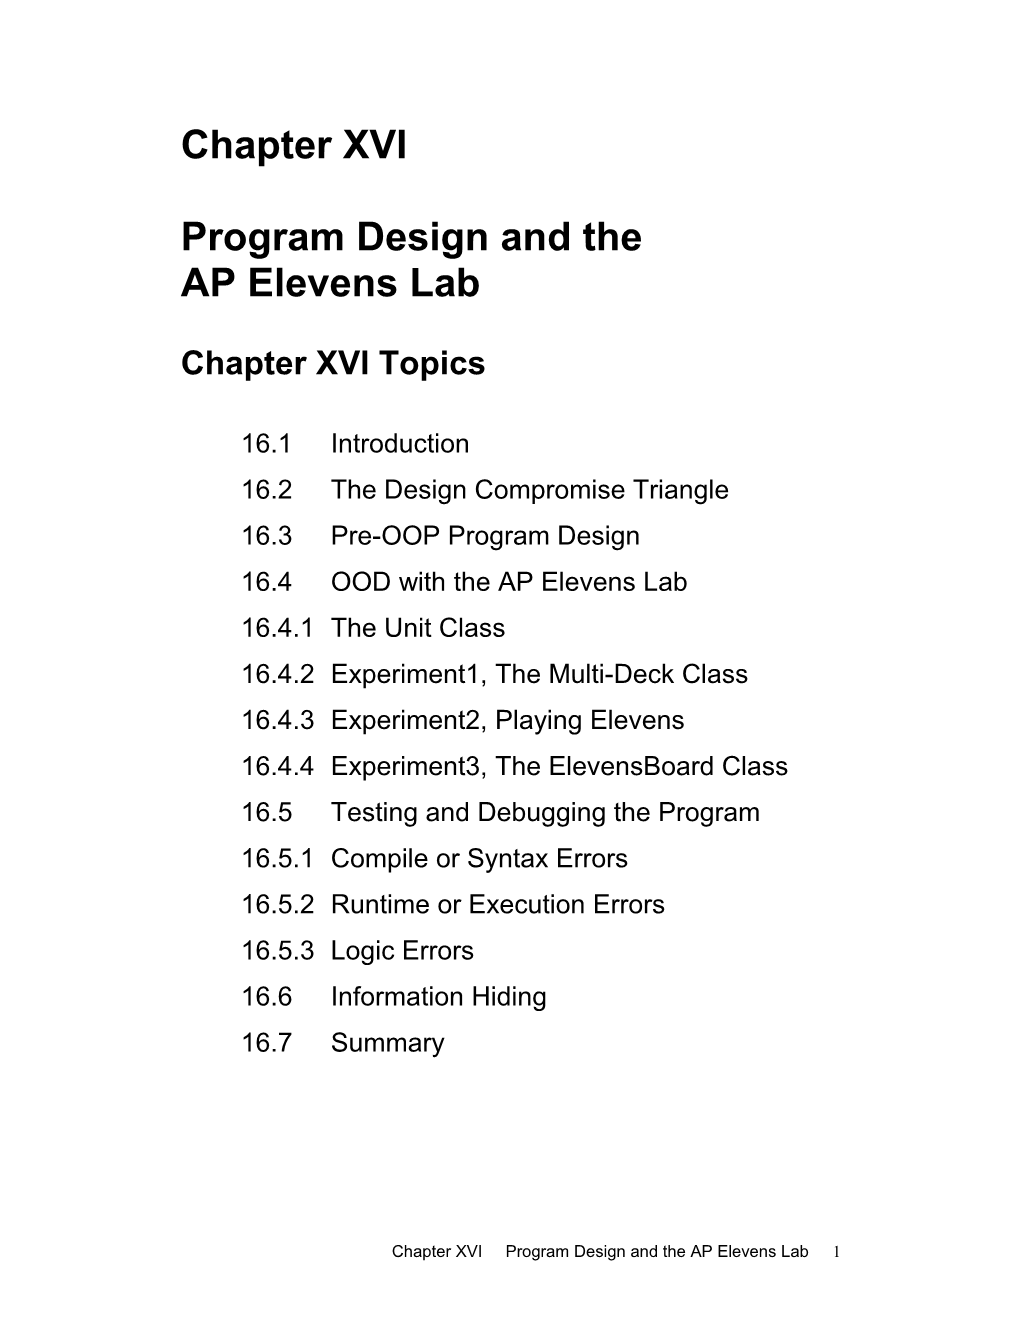 Program Design and The